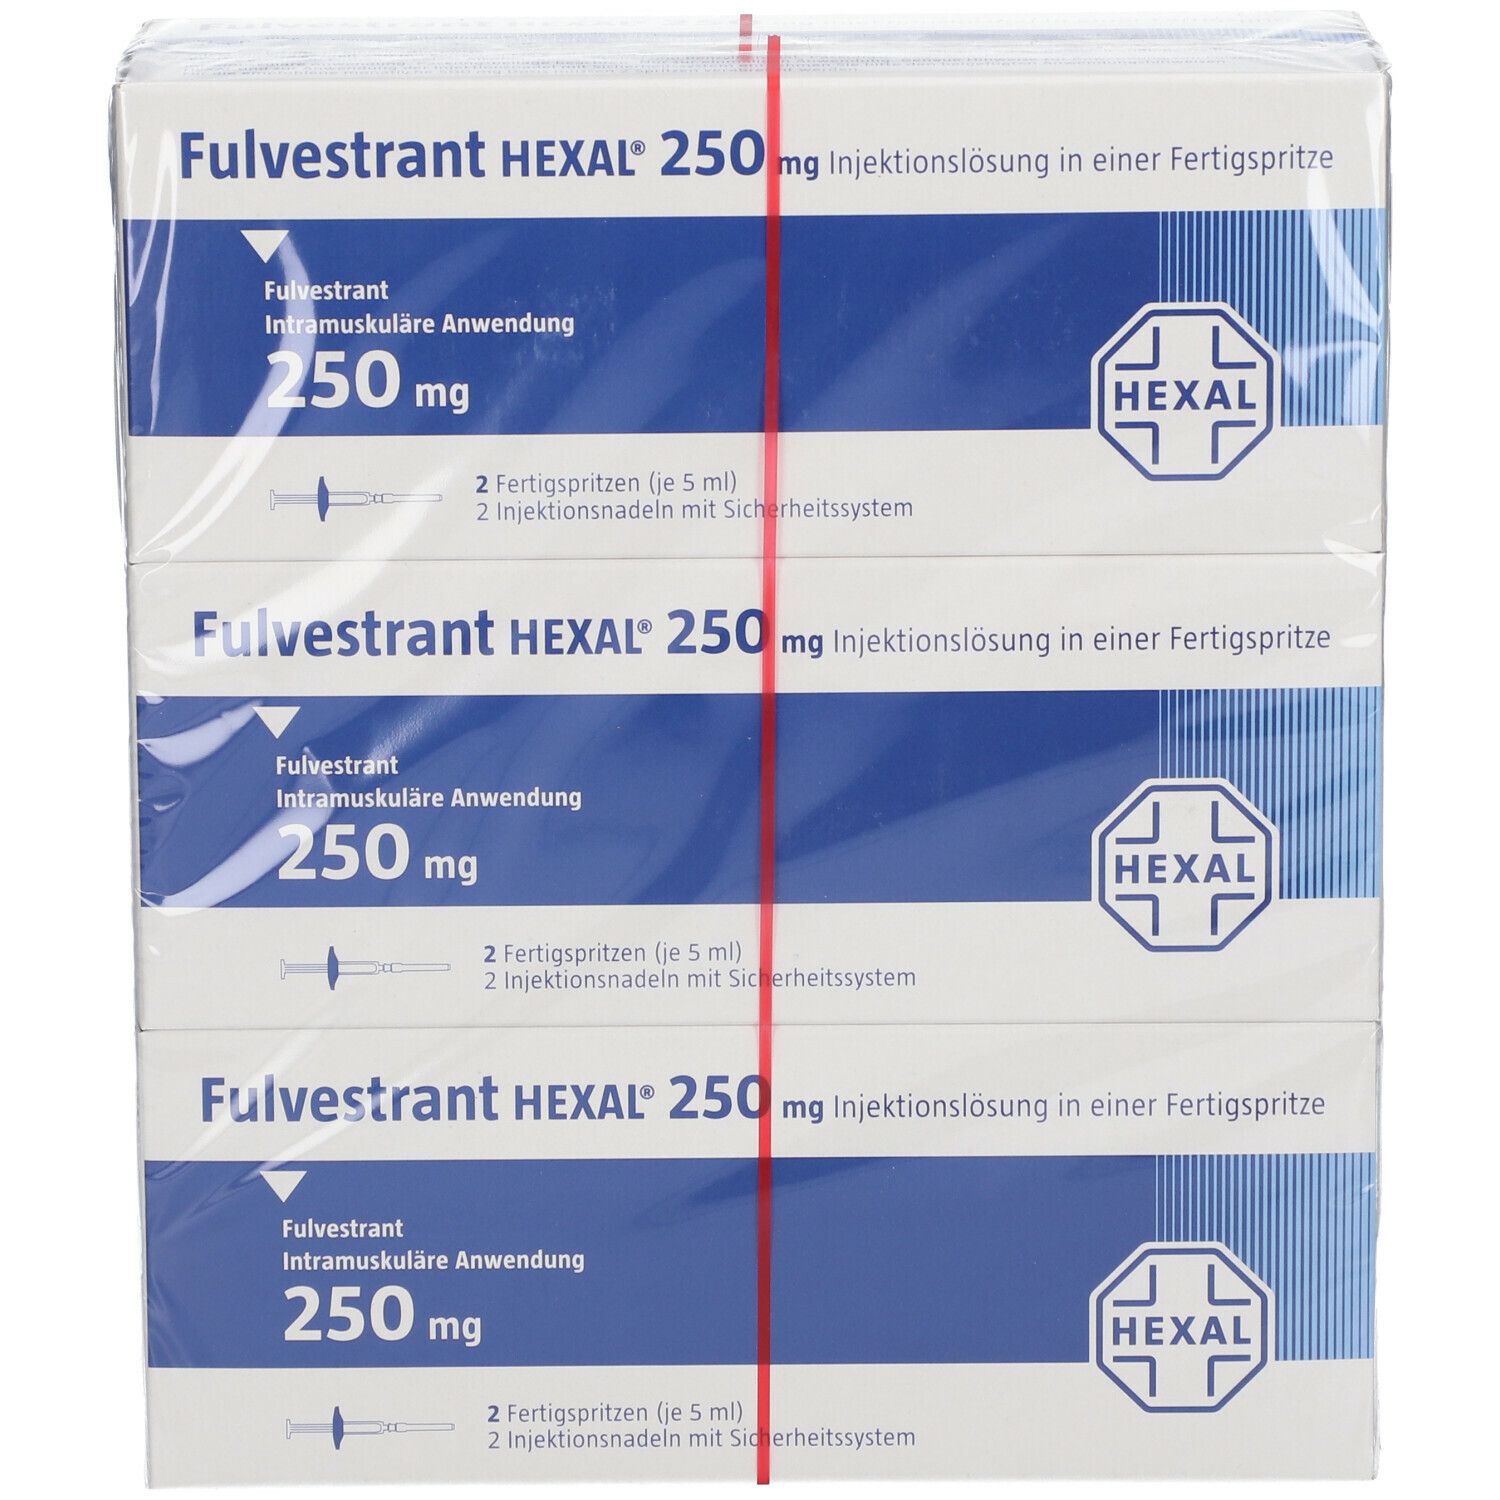 Fulvestrant HEXAL® 250 mg